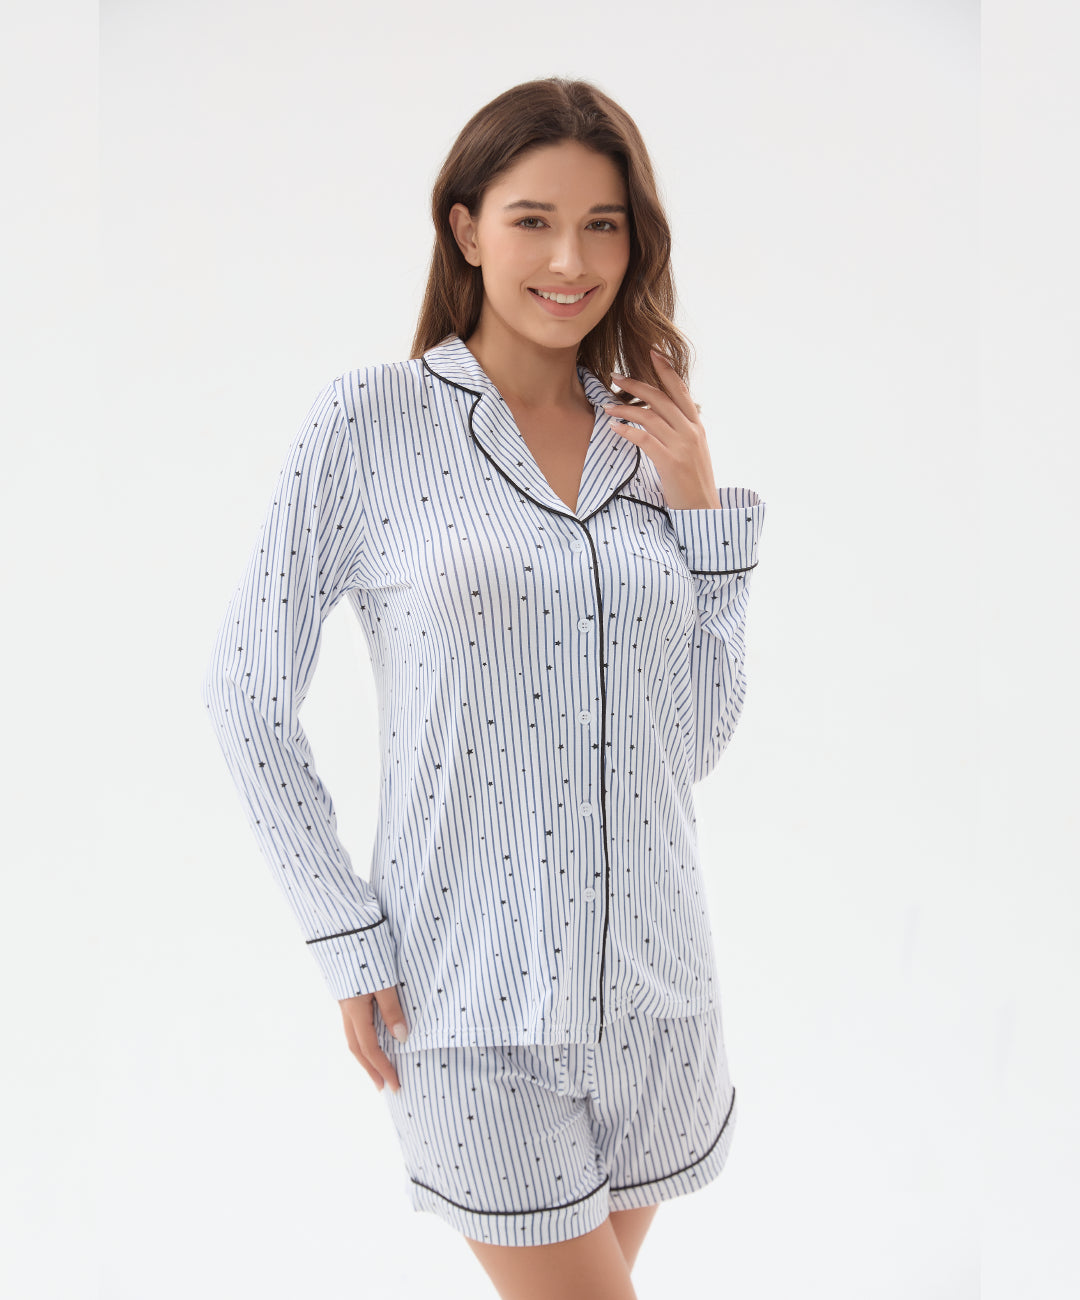 Cool Jammies Bamboo Cooling Long Sleeve Sleepwear Pajama Set - Aussino Malaysia